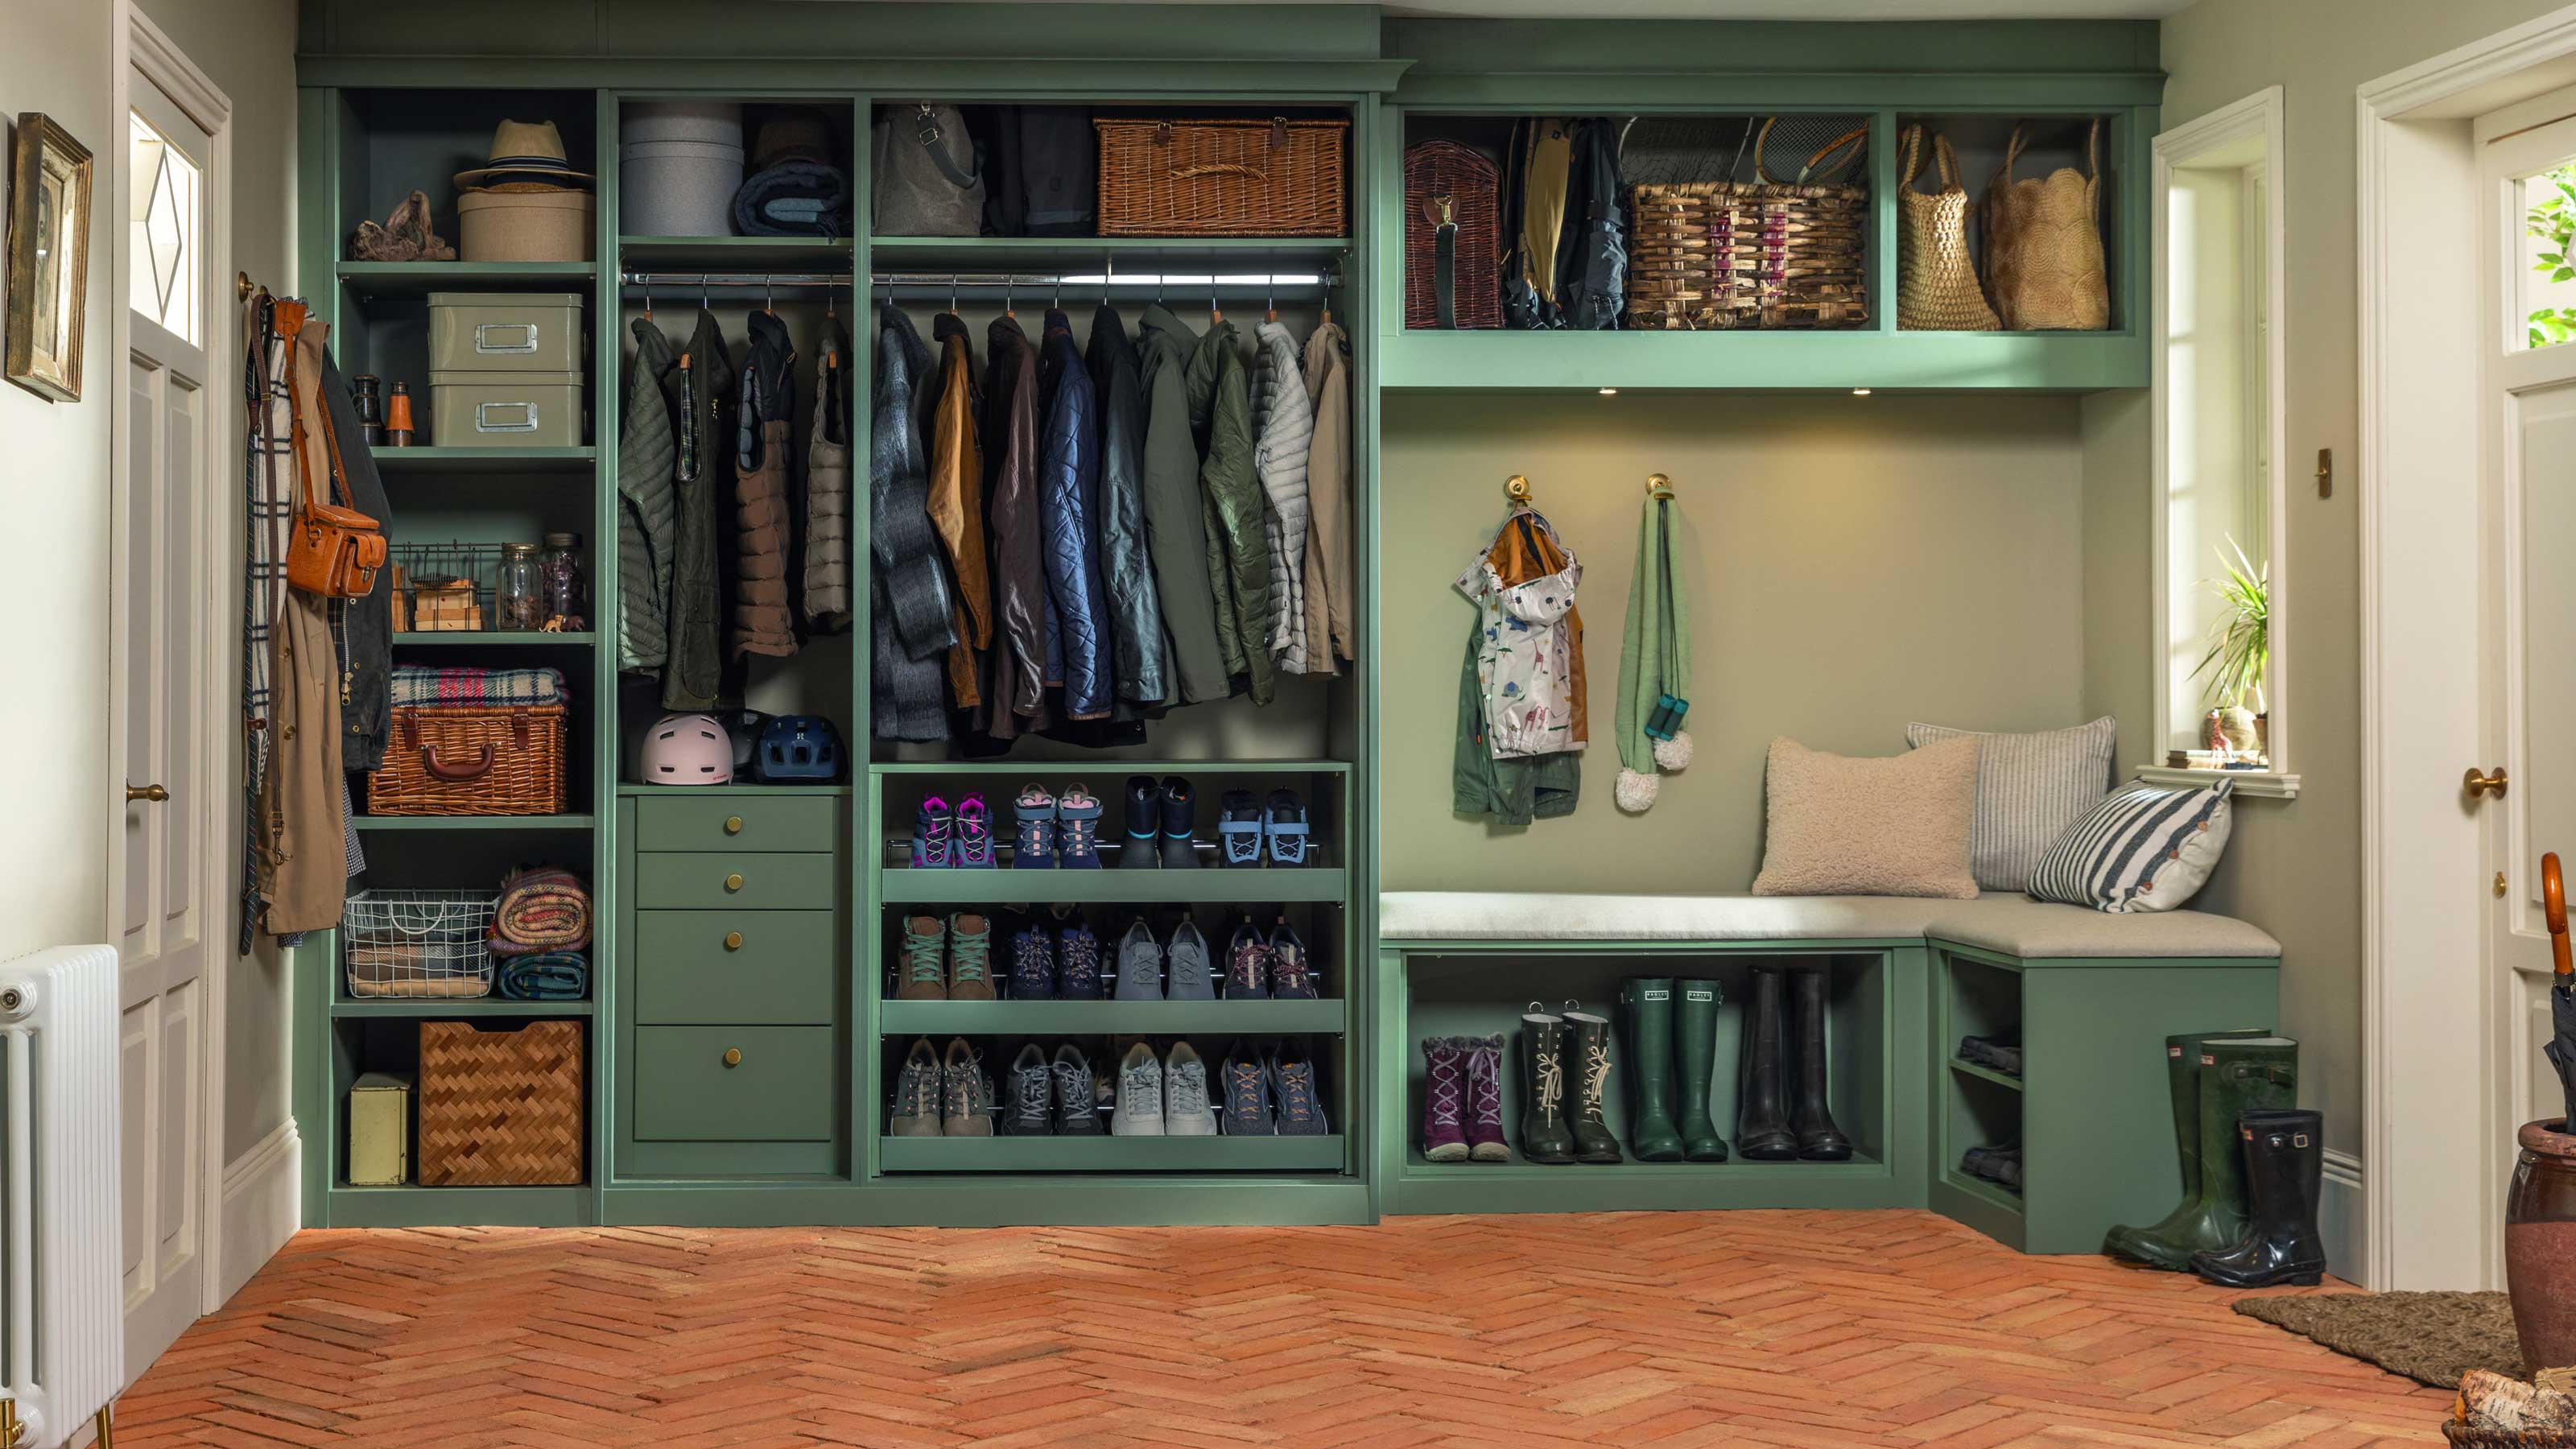 12 Best Coat Closet Organization Tips, According to Professional Organizers